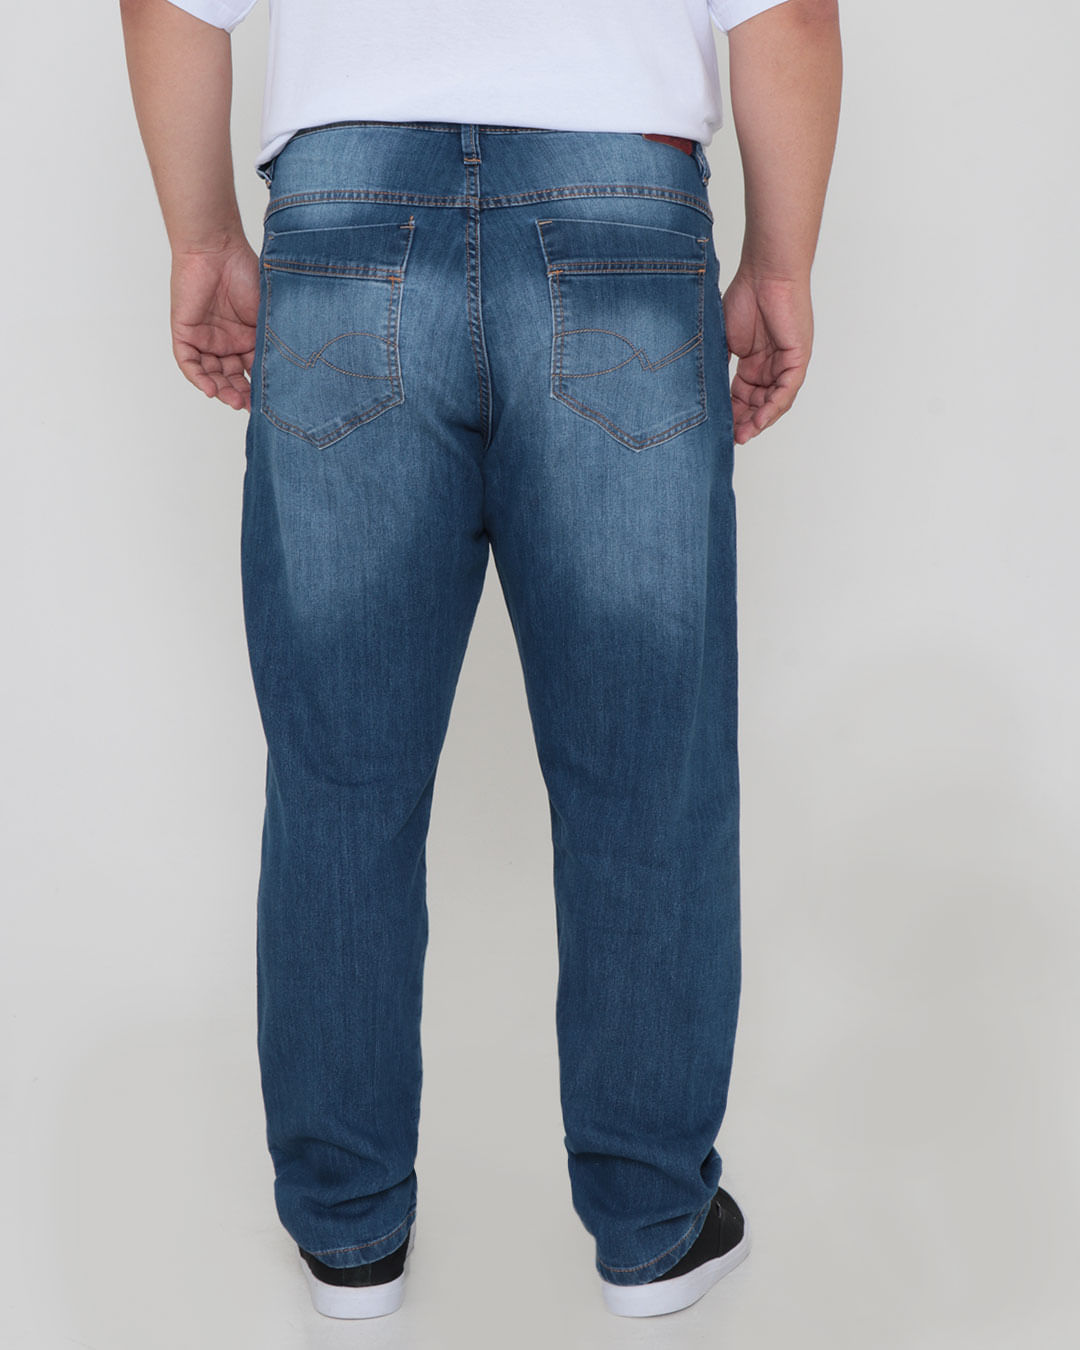 23321000197045-blue-jeans-medio-3